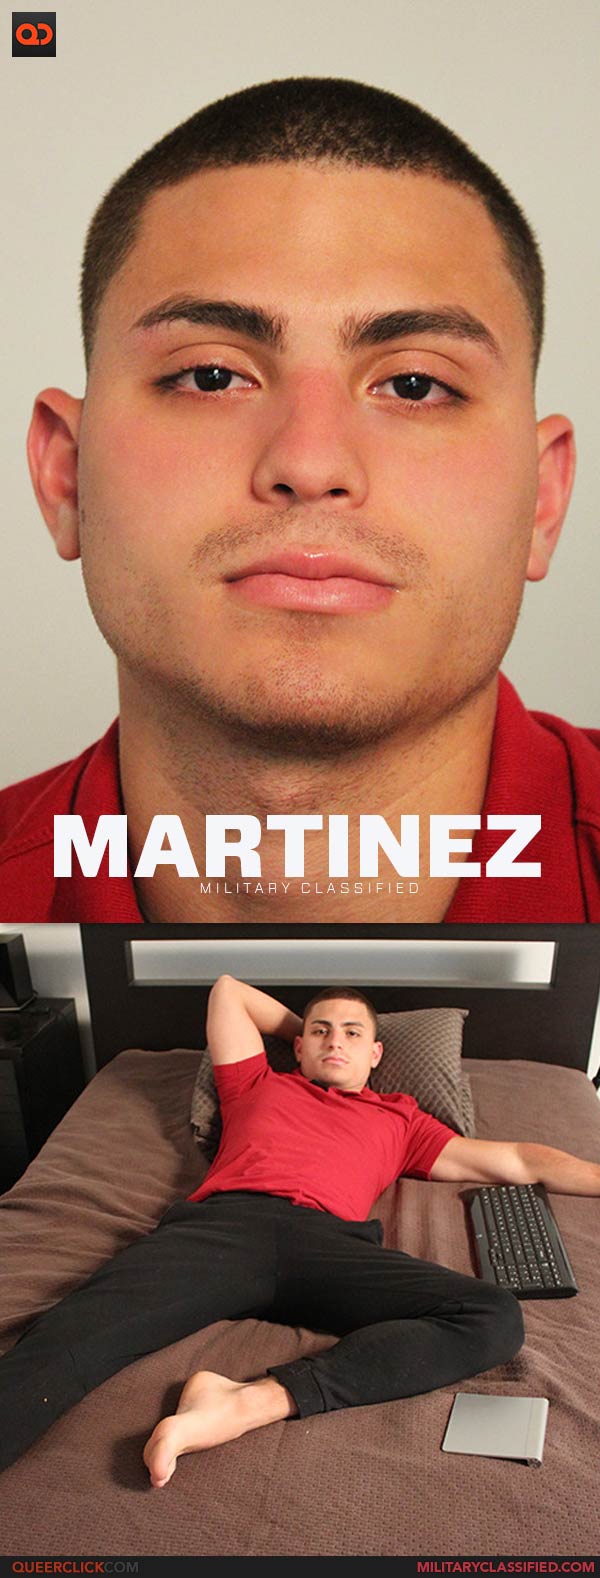 Military Classified: Martinez